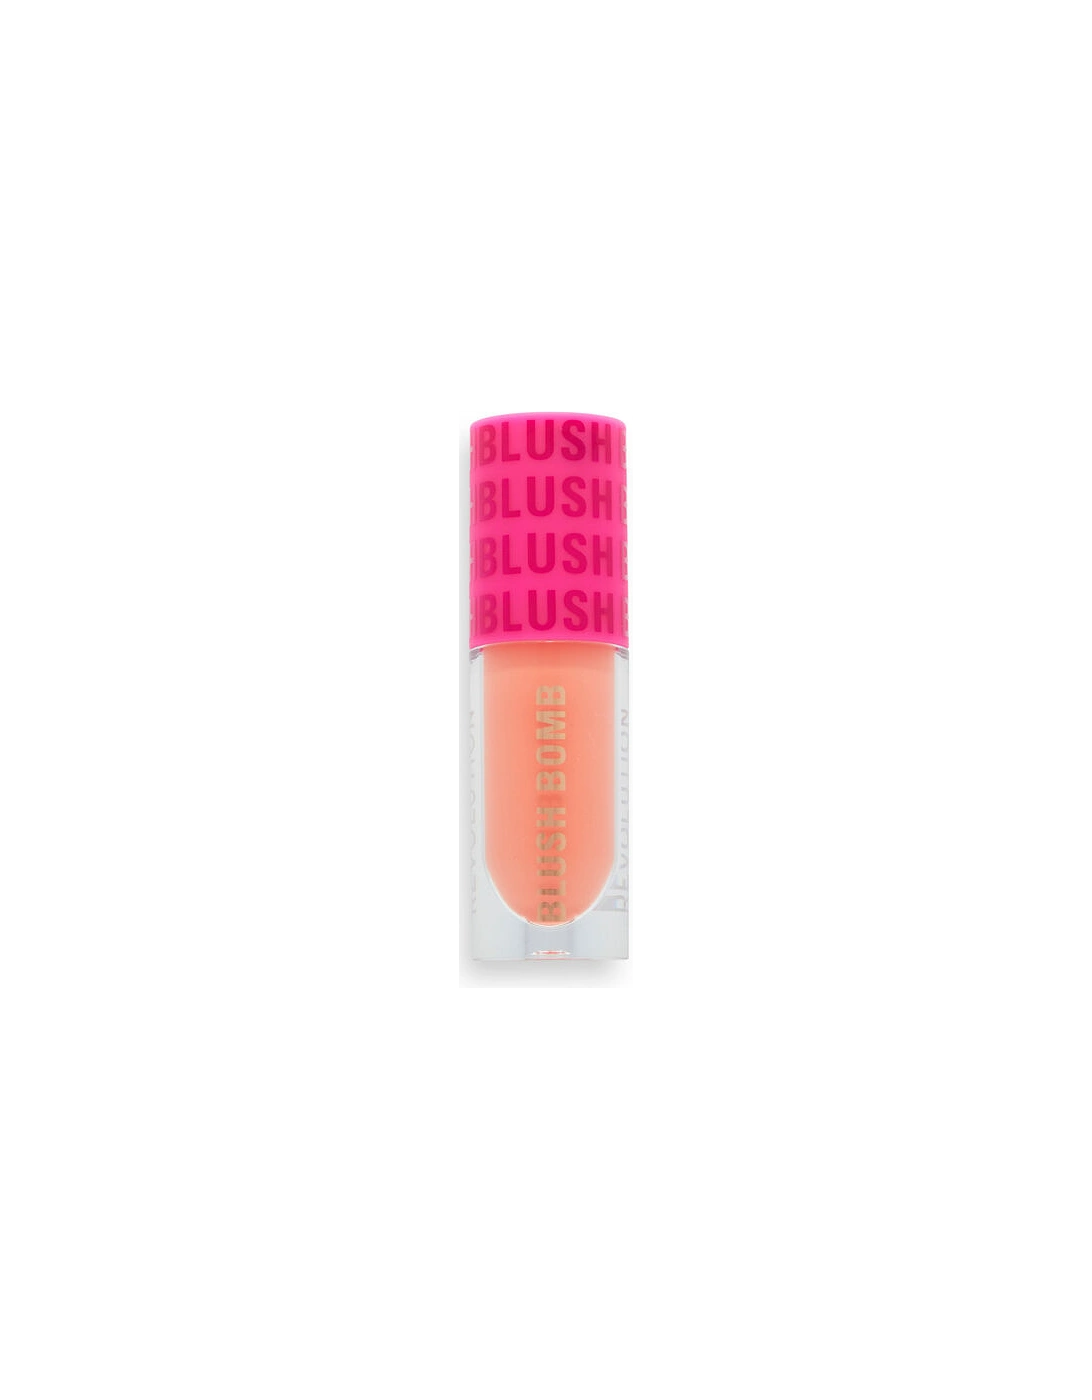 Makeup Blush Bomb Cream Blusher Peach Filter, 2 of 1